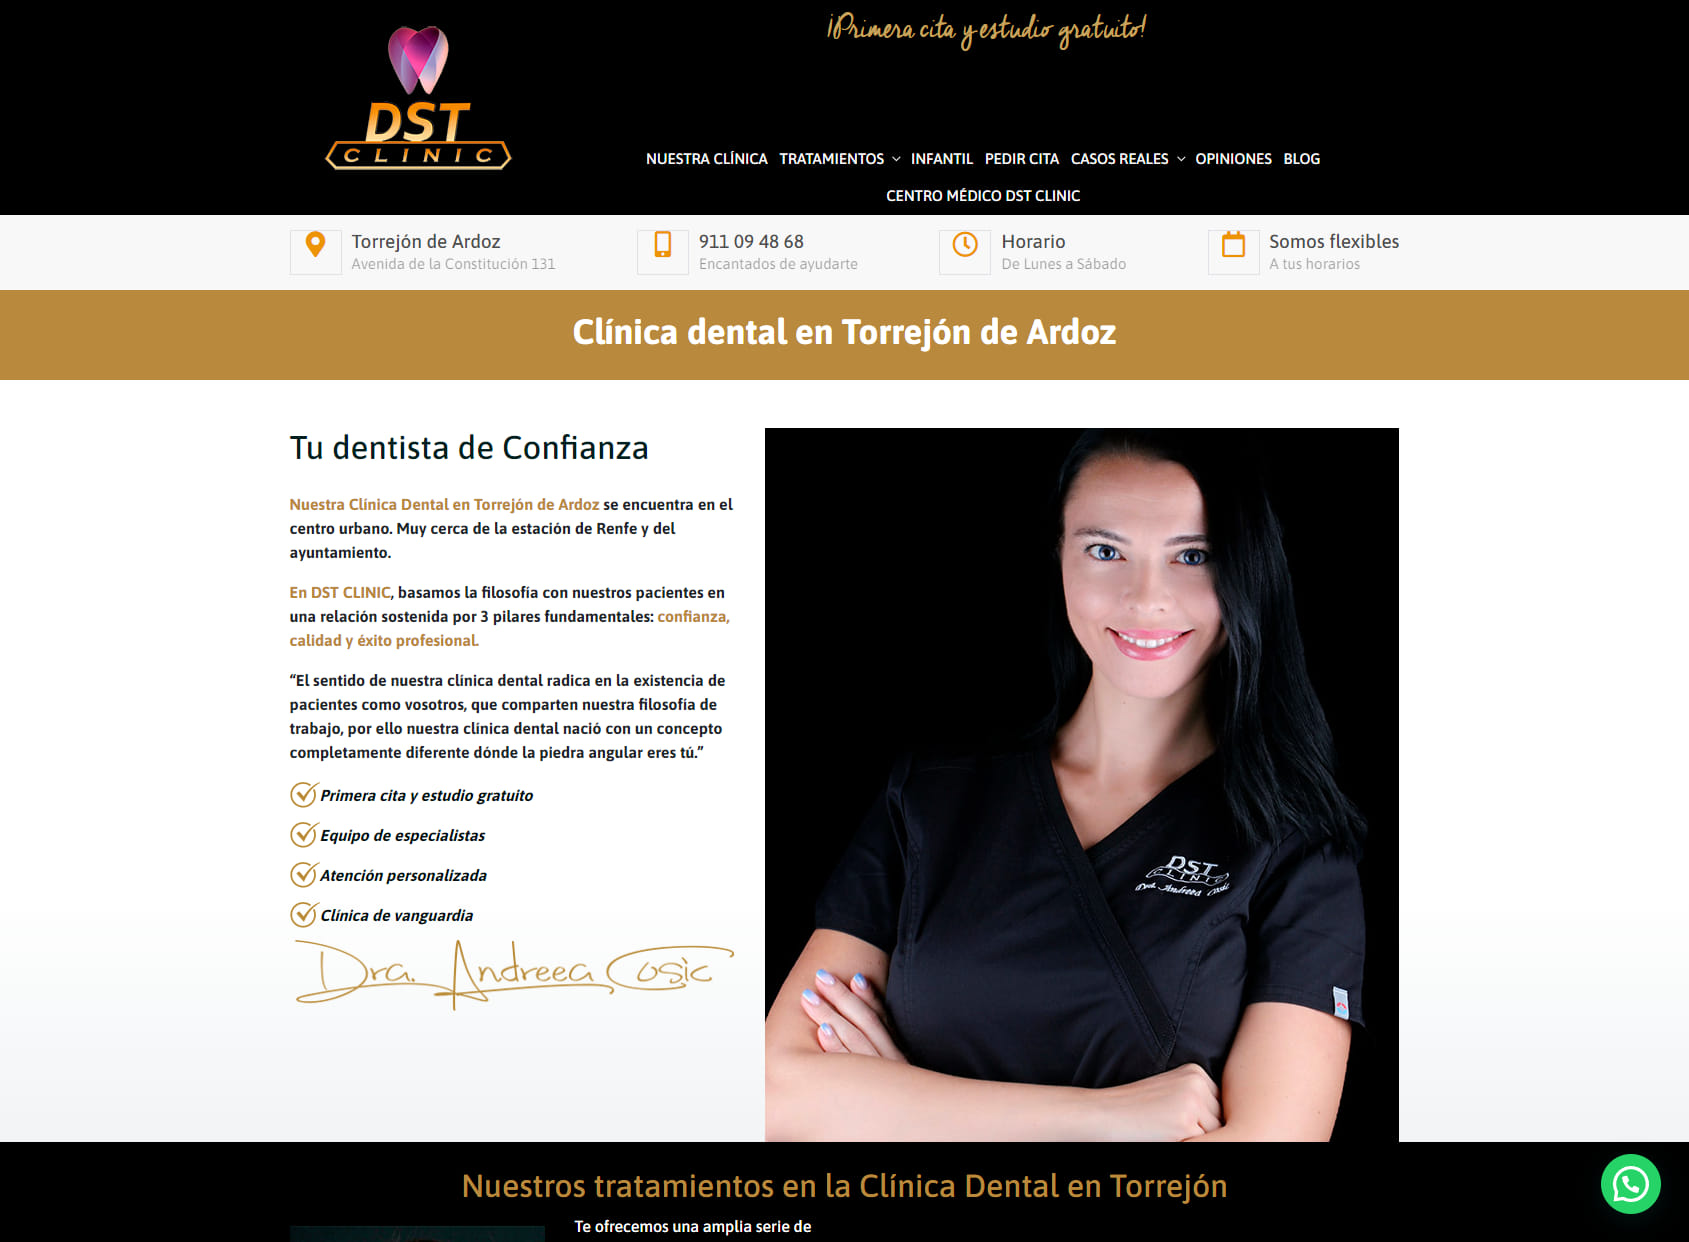 Centro Médico en Torrejón de Ardoz DST Clinic - Implantes Dentales - Ortodoncia - Ácido Hialurónico